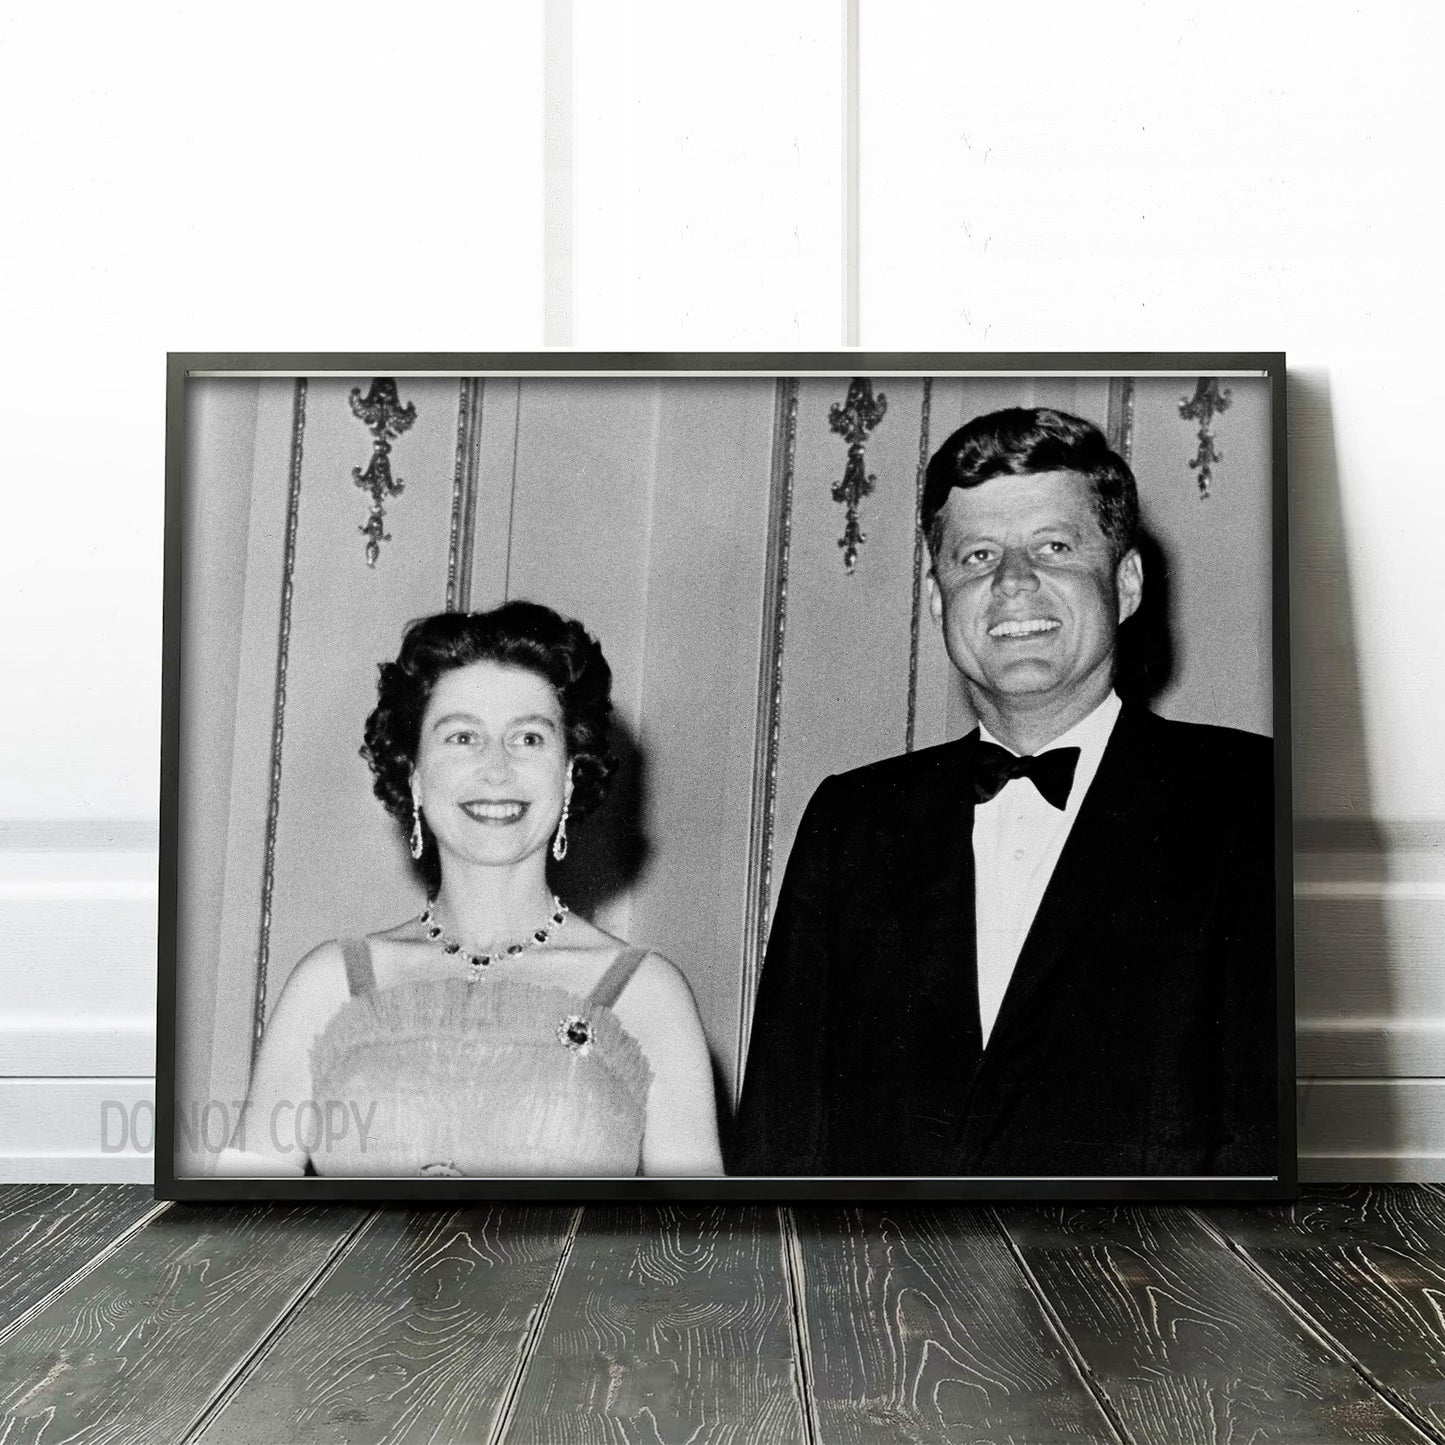 John F Kennedy (JFK) and Queen Elizabeth